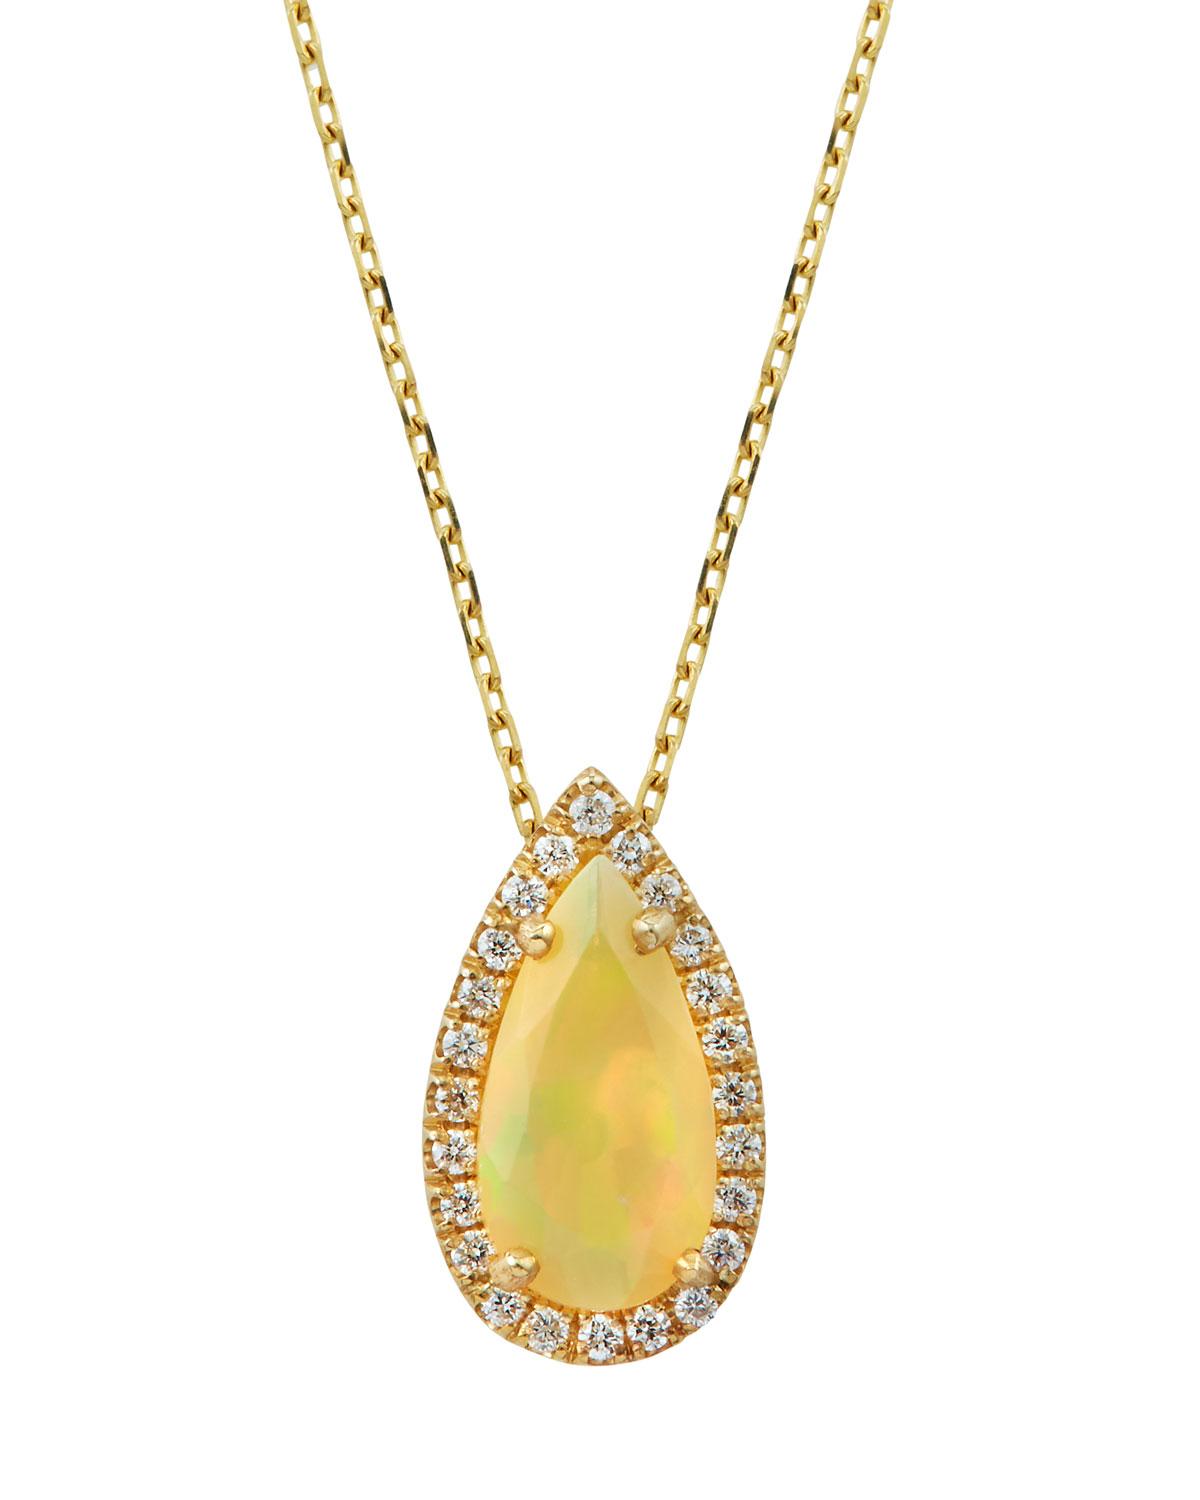 Lyst - KALAN by Suzanne Kalan 14k Pear Opal Pendant Necklace W/ Diamonds